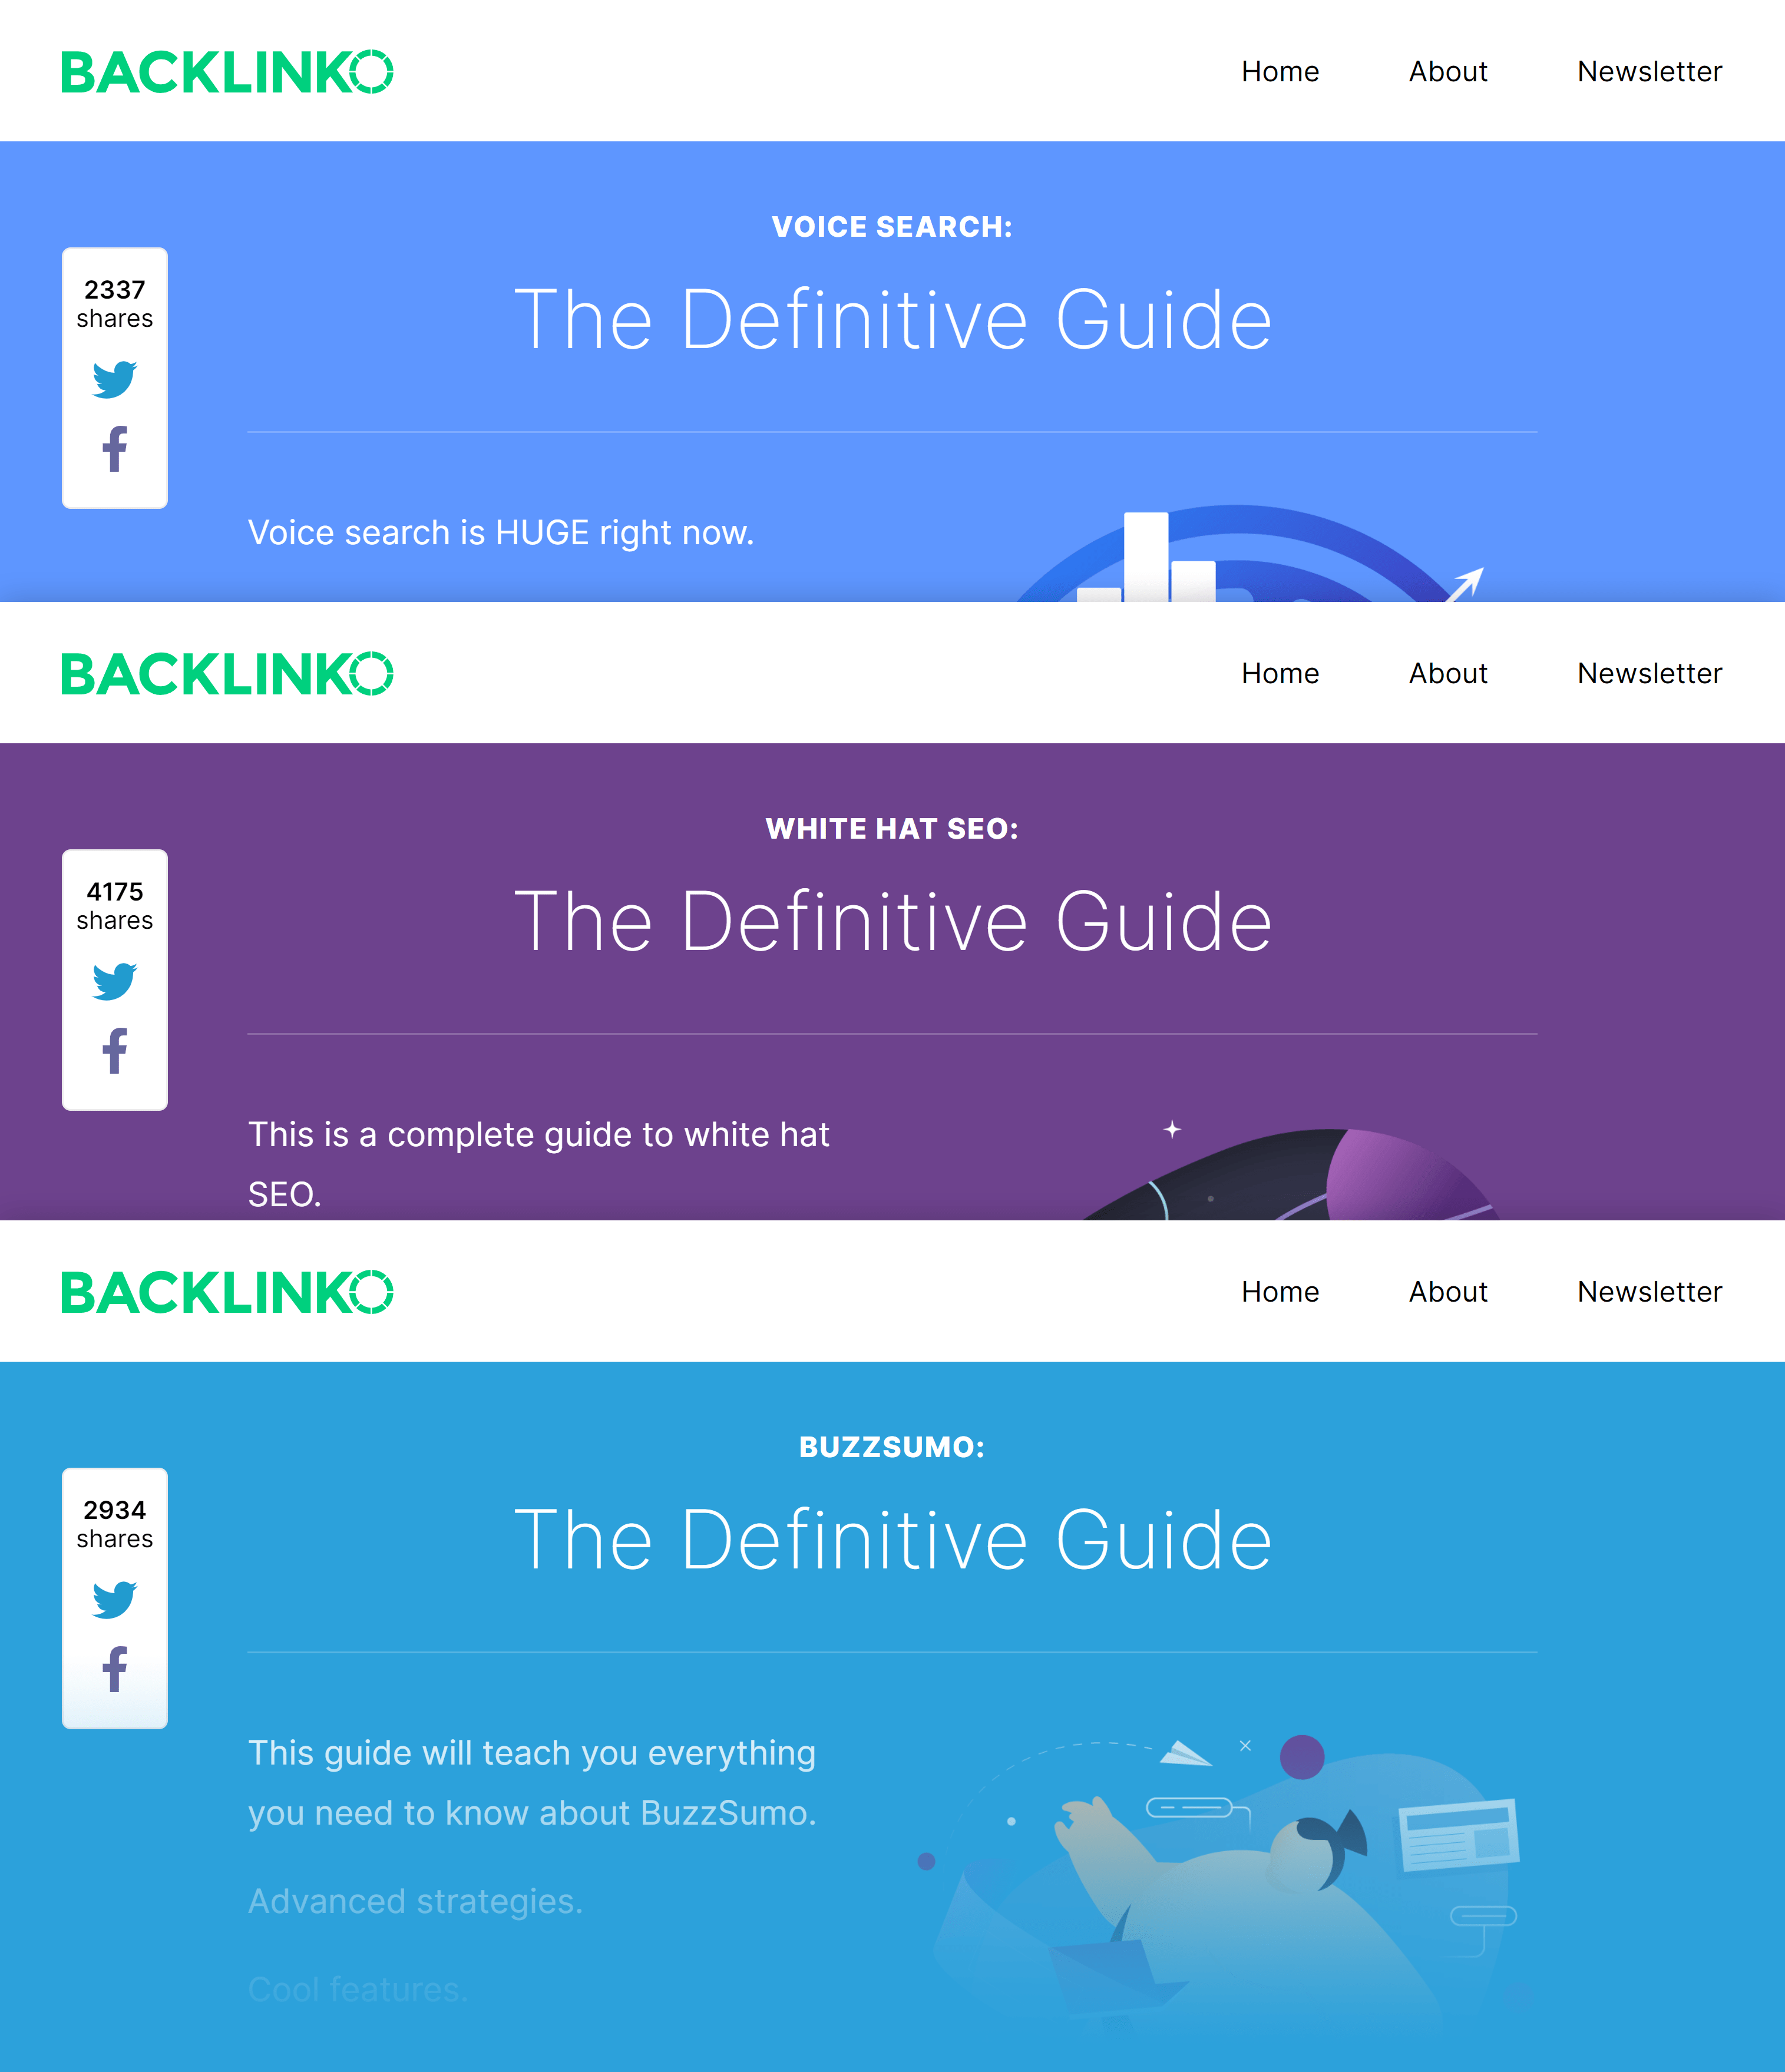 Backlinko custom designed guides